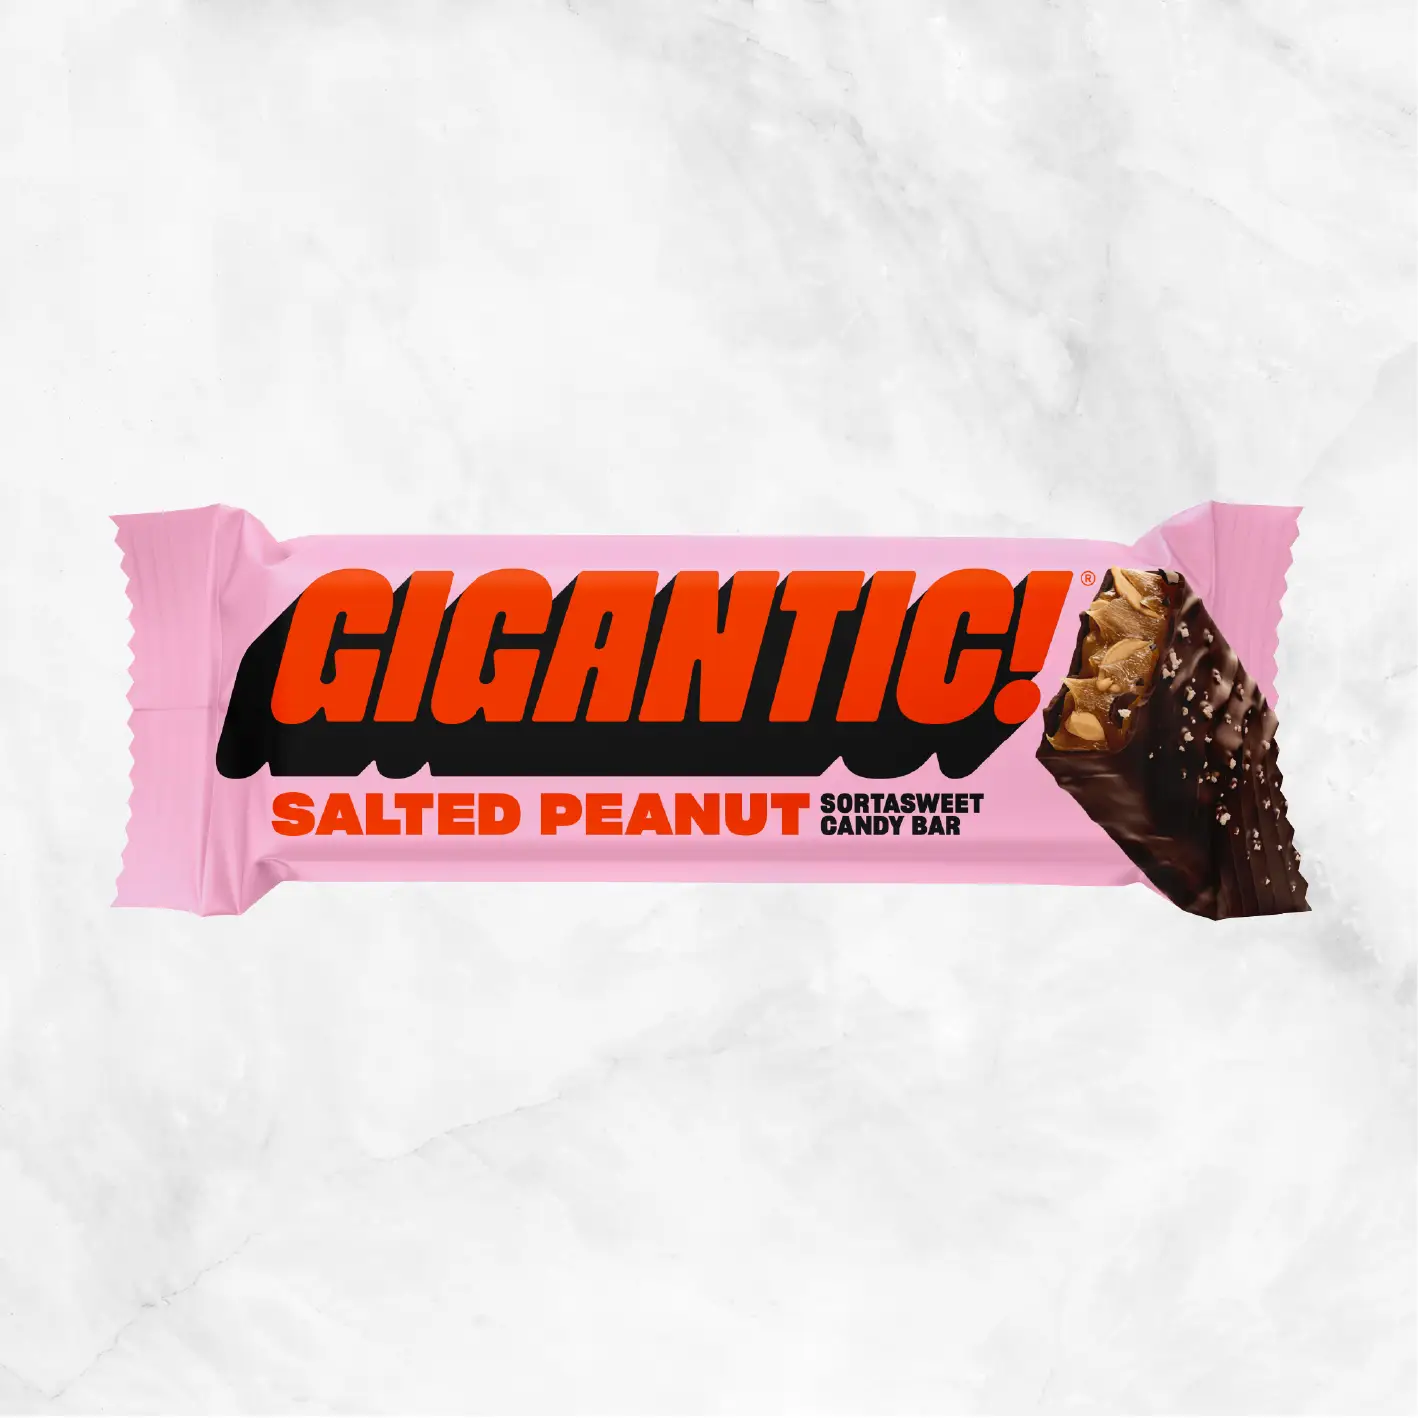 Salted Peanut Sortasweet Candy Bar